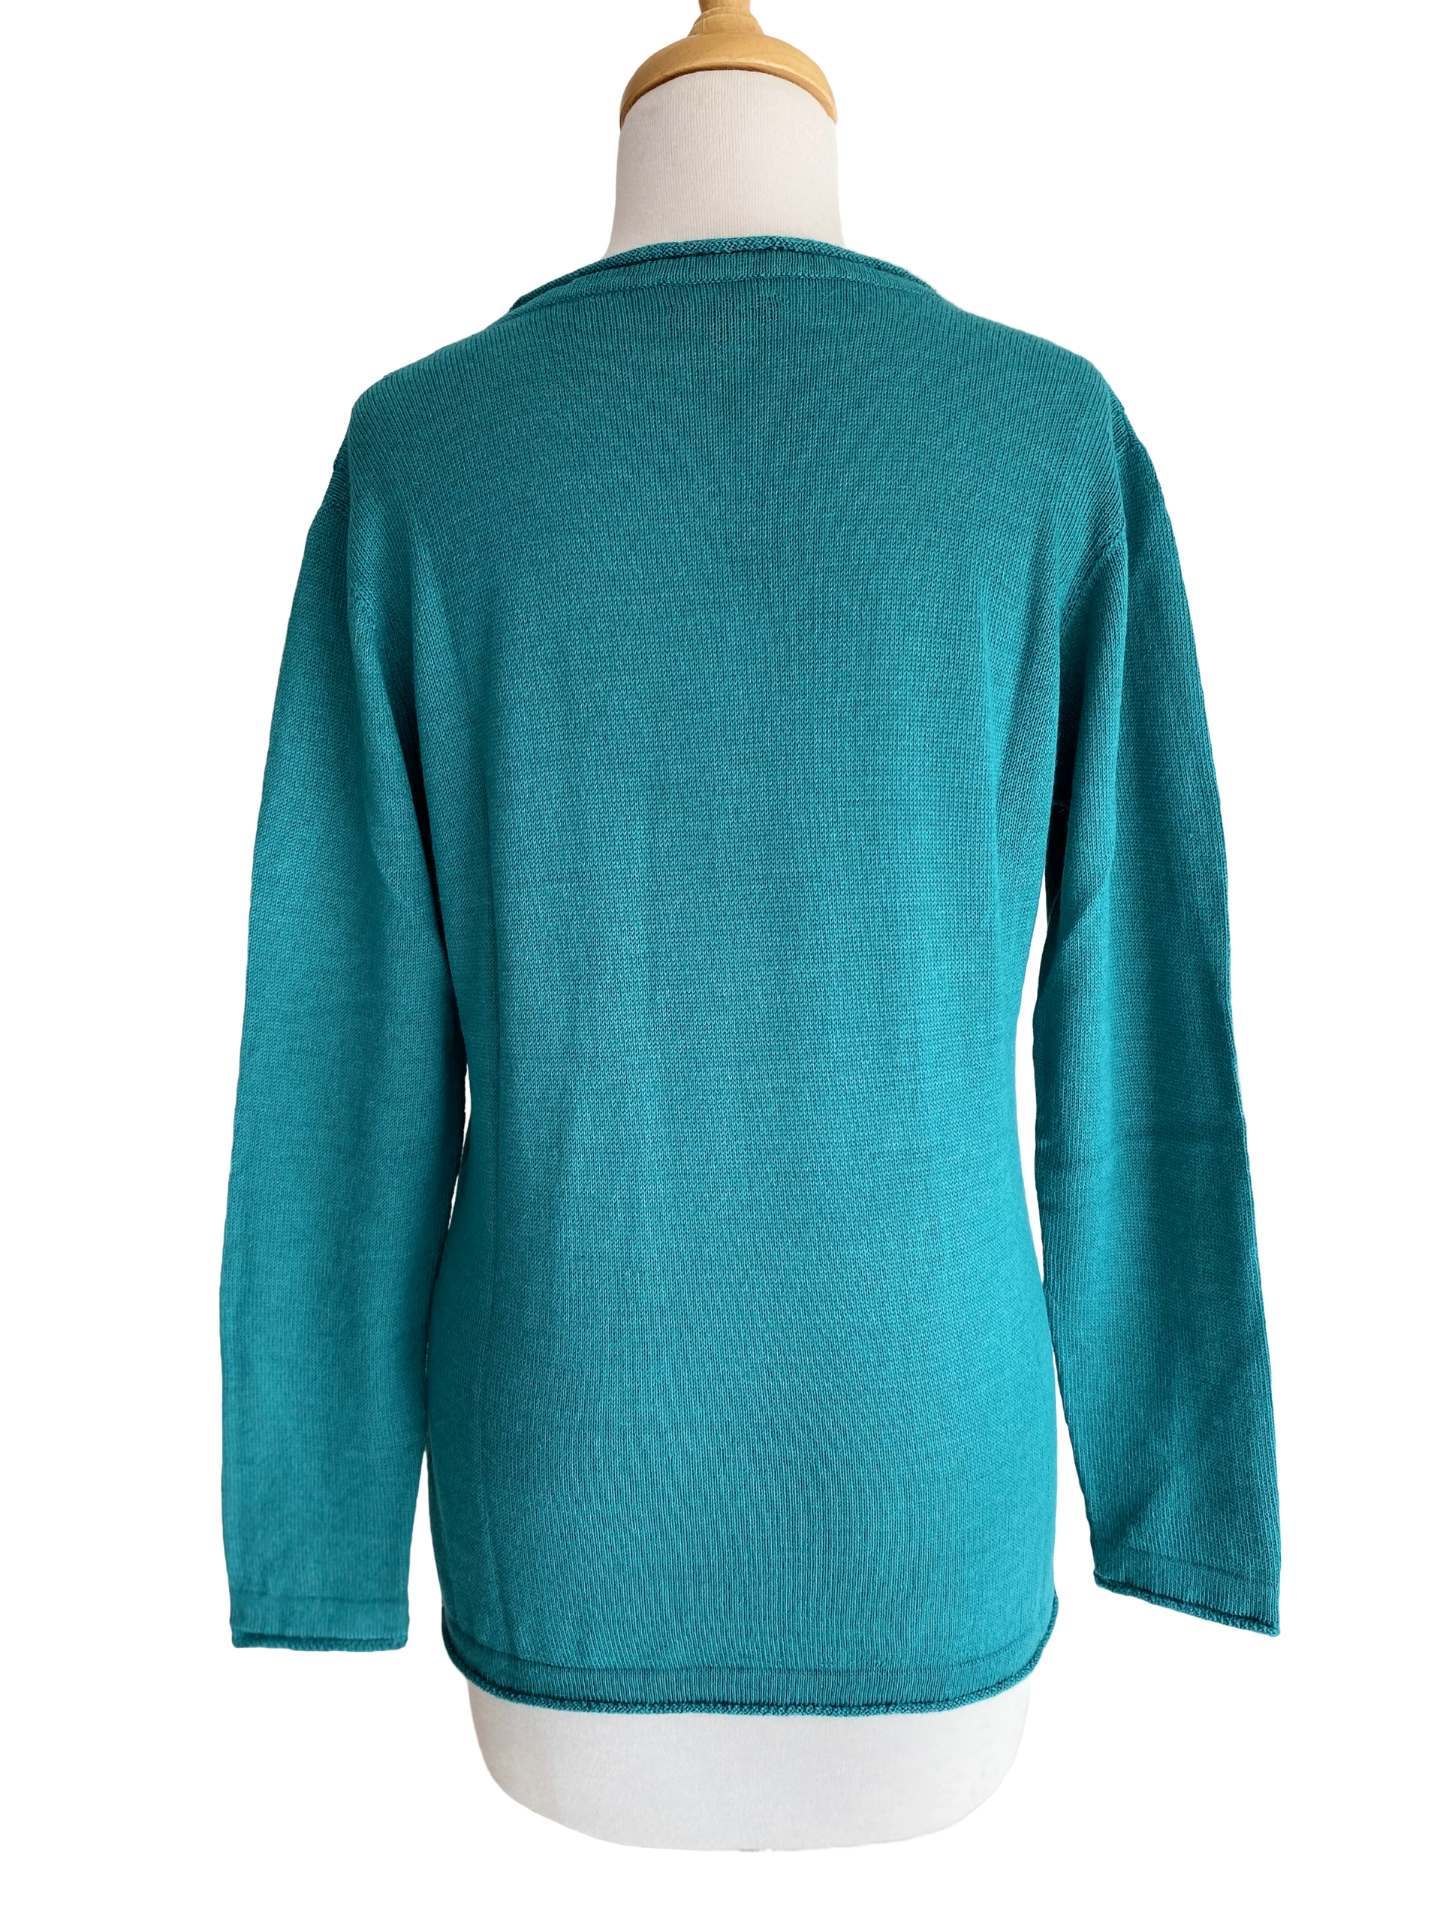 Briella Sweater Jade Green - 2